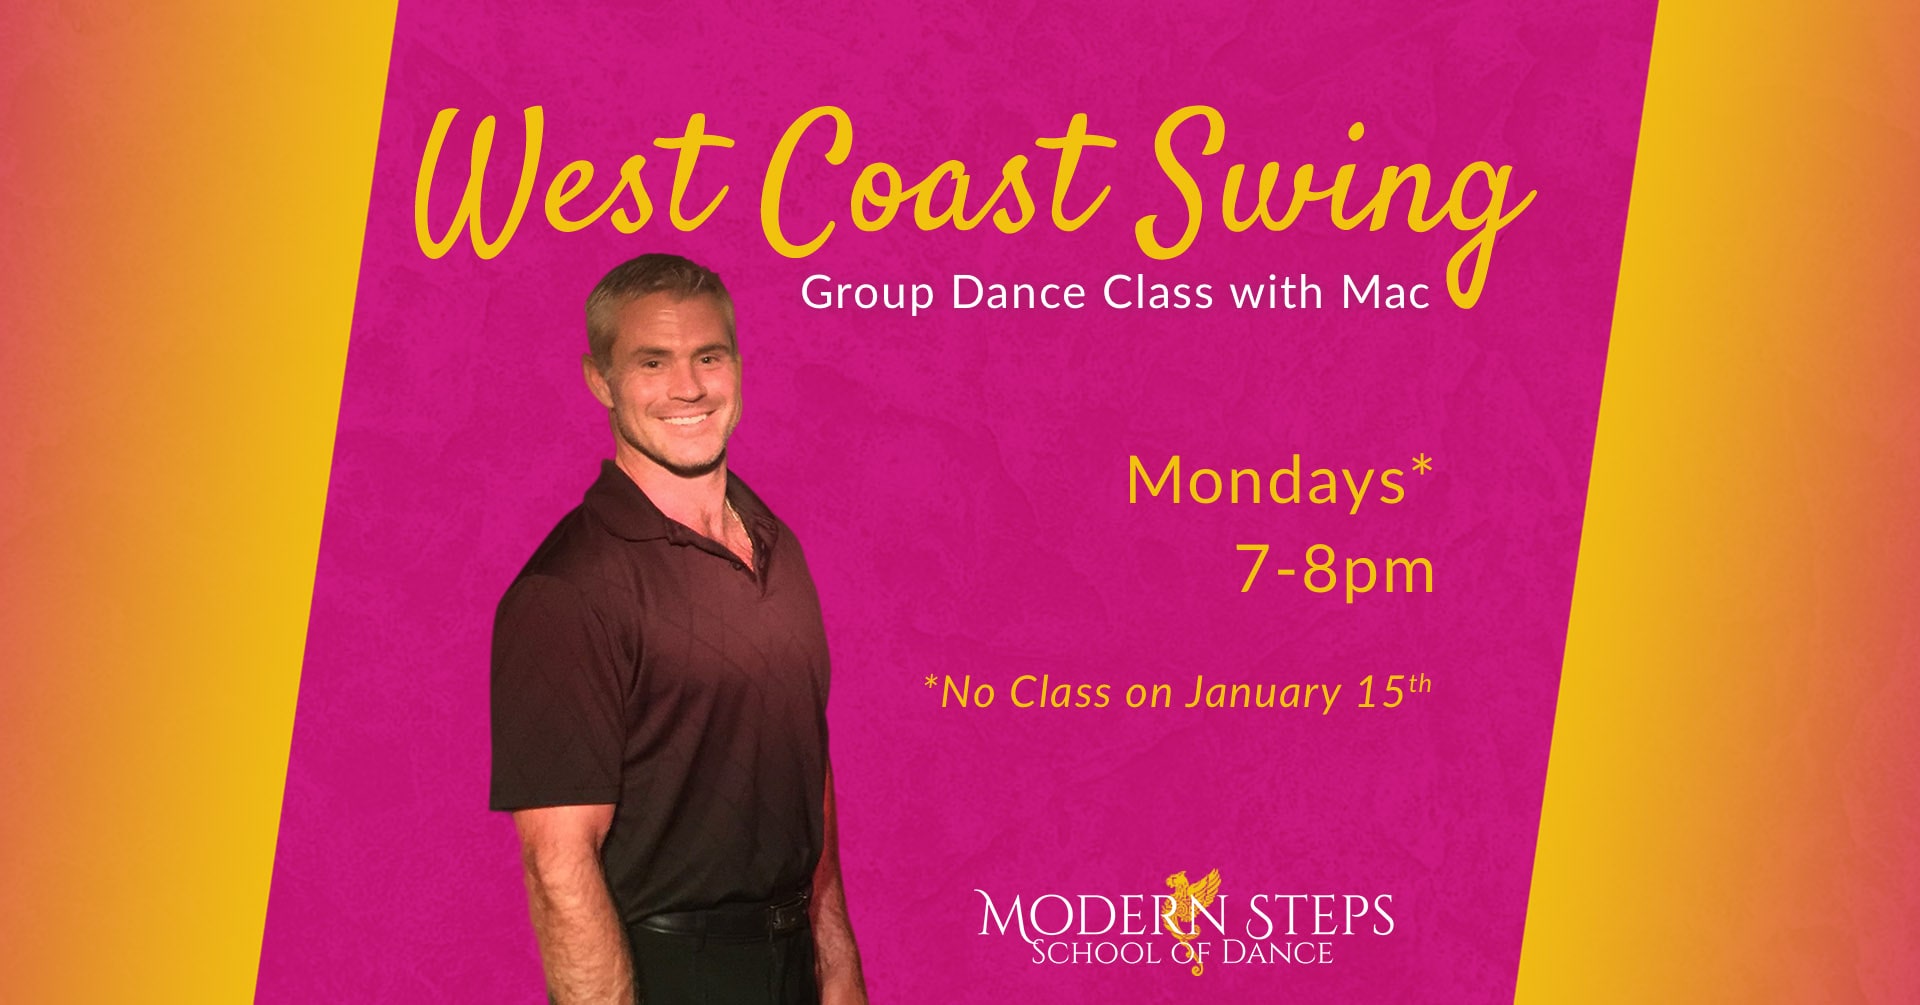 Naples Ballroom Dance Lessons - West Coast Swing - Modern Steps School of Dance - Naples Florida - Naples Florida Things to Do